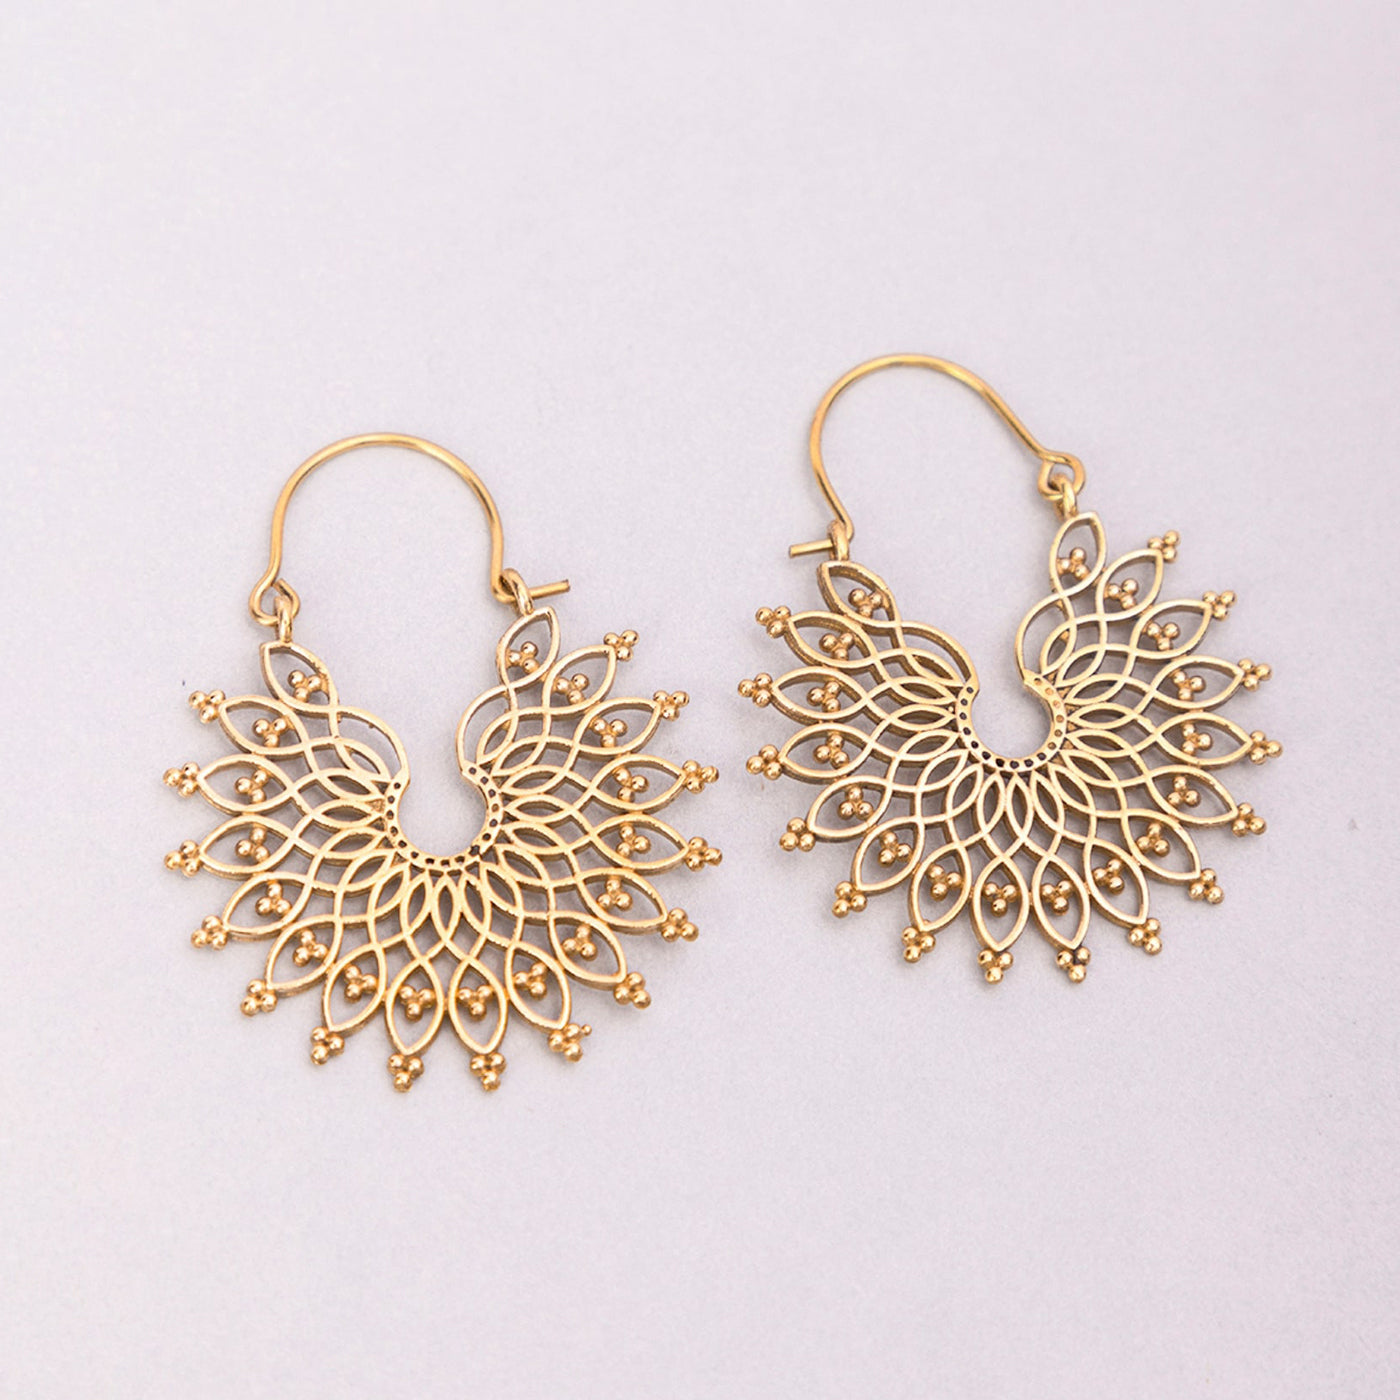 Black Spinel 14k Gold Fill Handmade Earrings | The Stitch Alliance